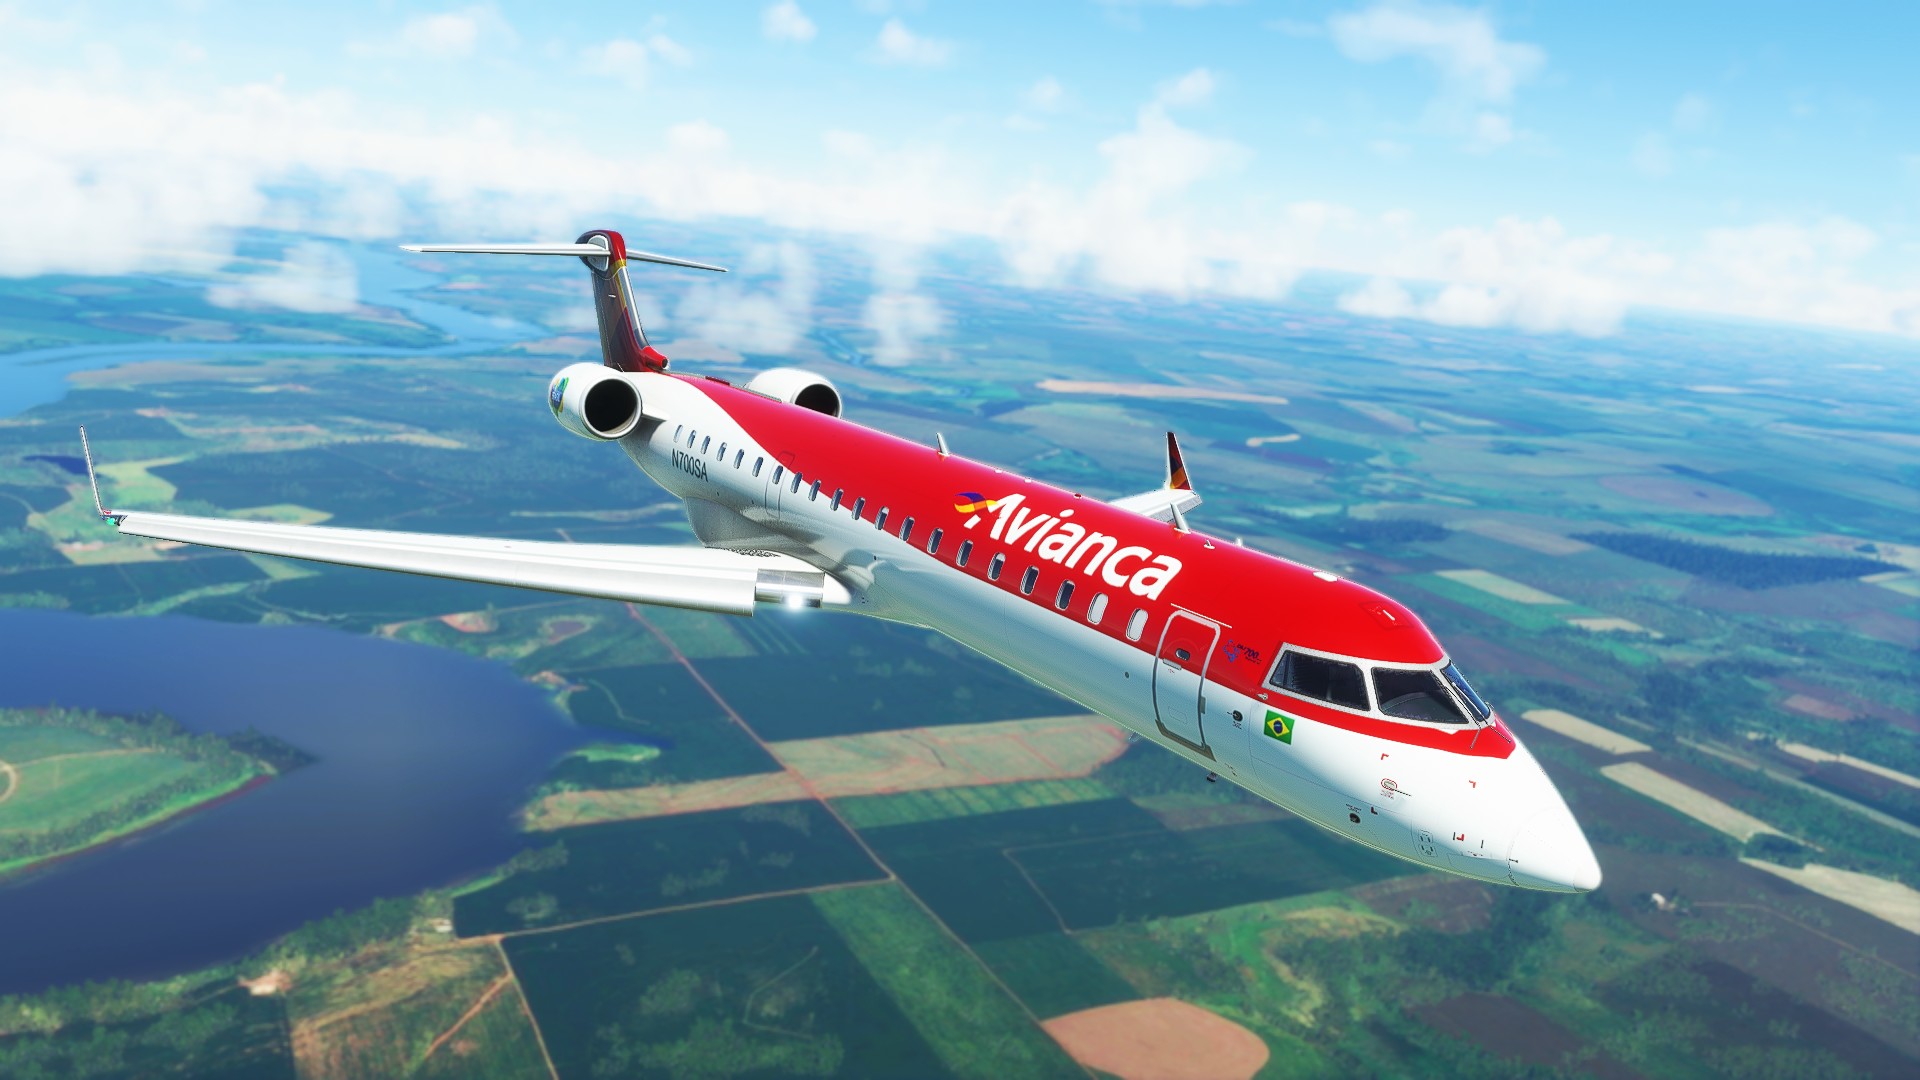 Microsoft Flight Simulator Pc Aerosoft Crj 700 Over Brazil